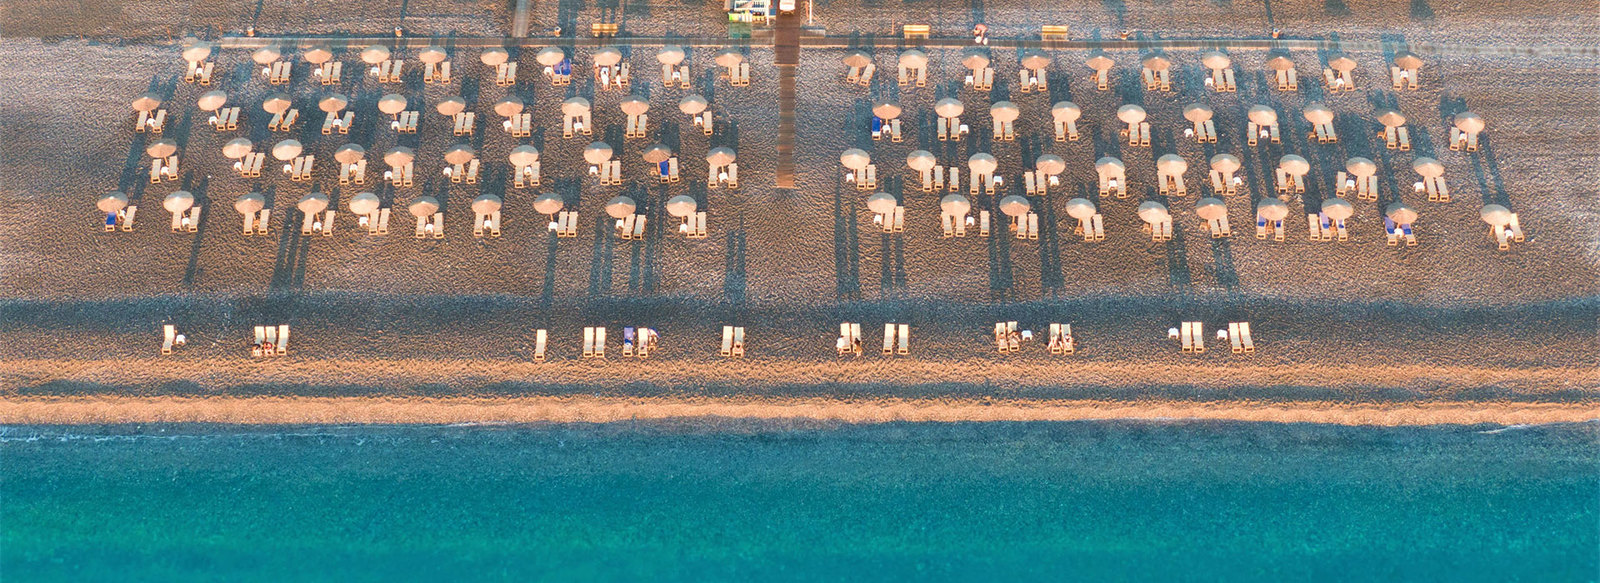 Resort 5* con 6 piscine esterne